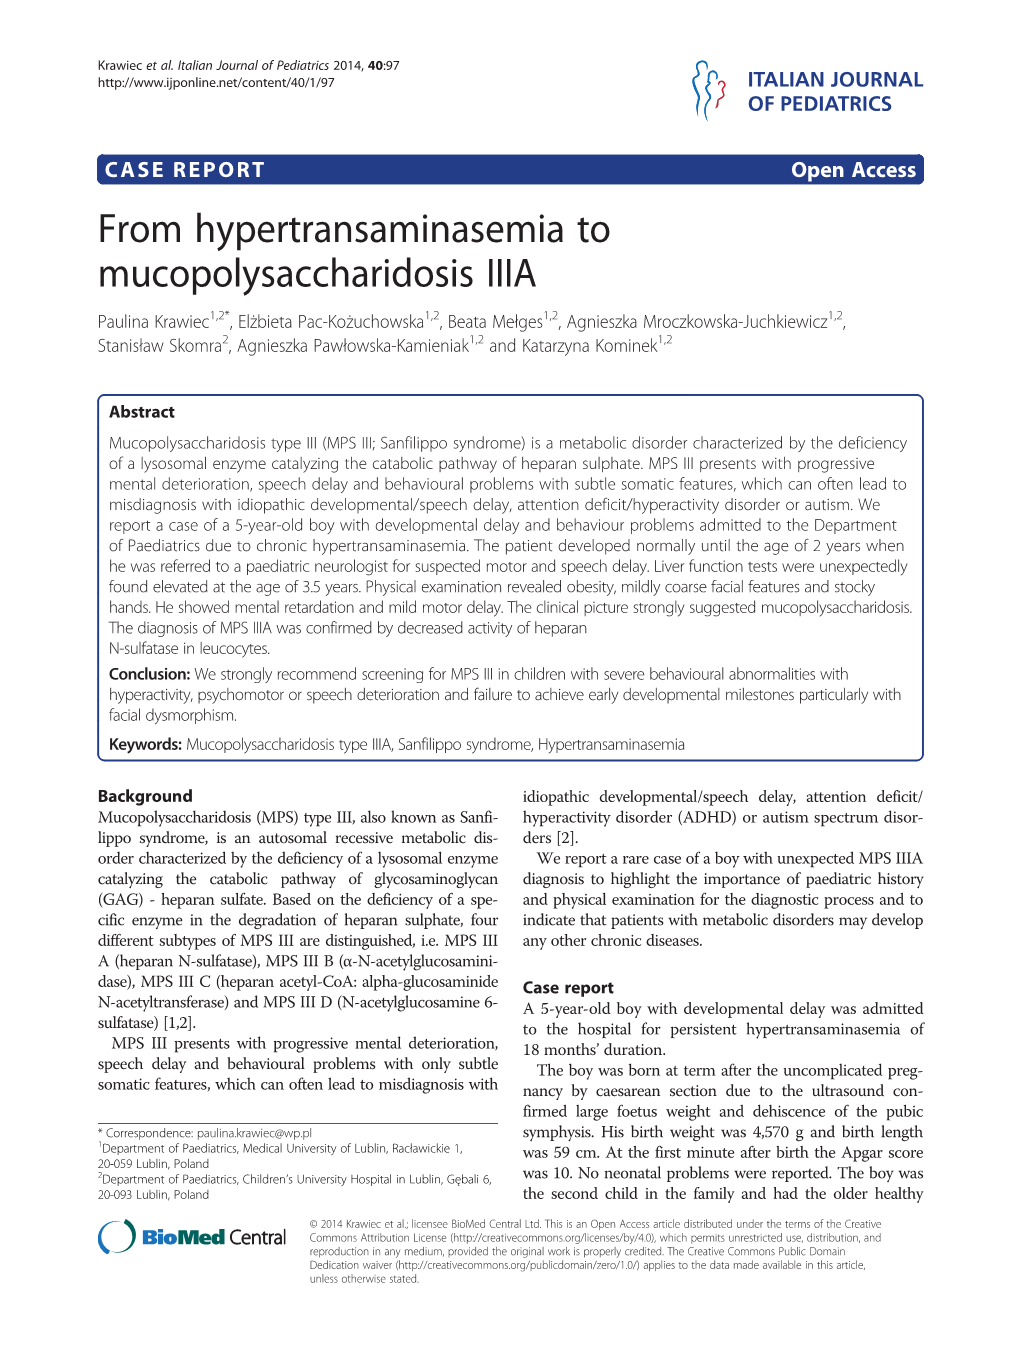 From Hypertransaminasemia to Mucopolysaccharidosis IIIA